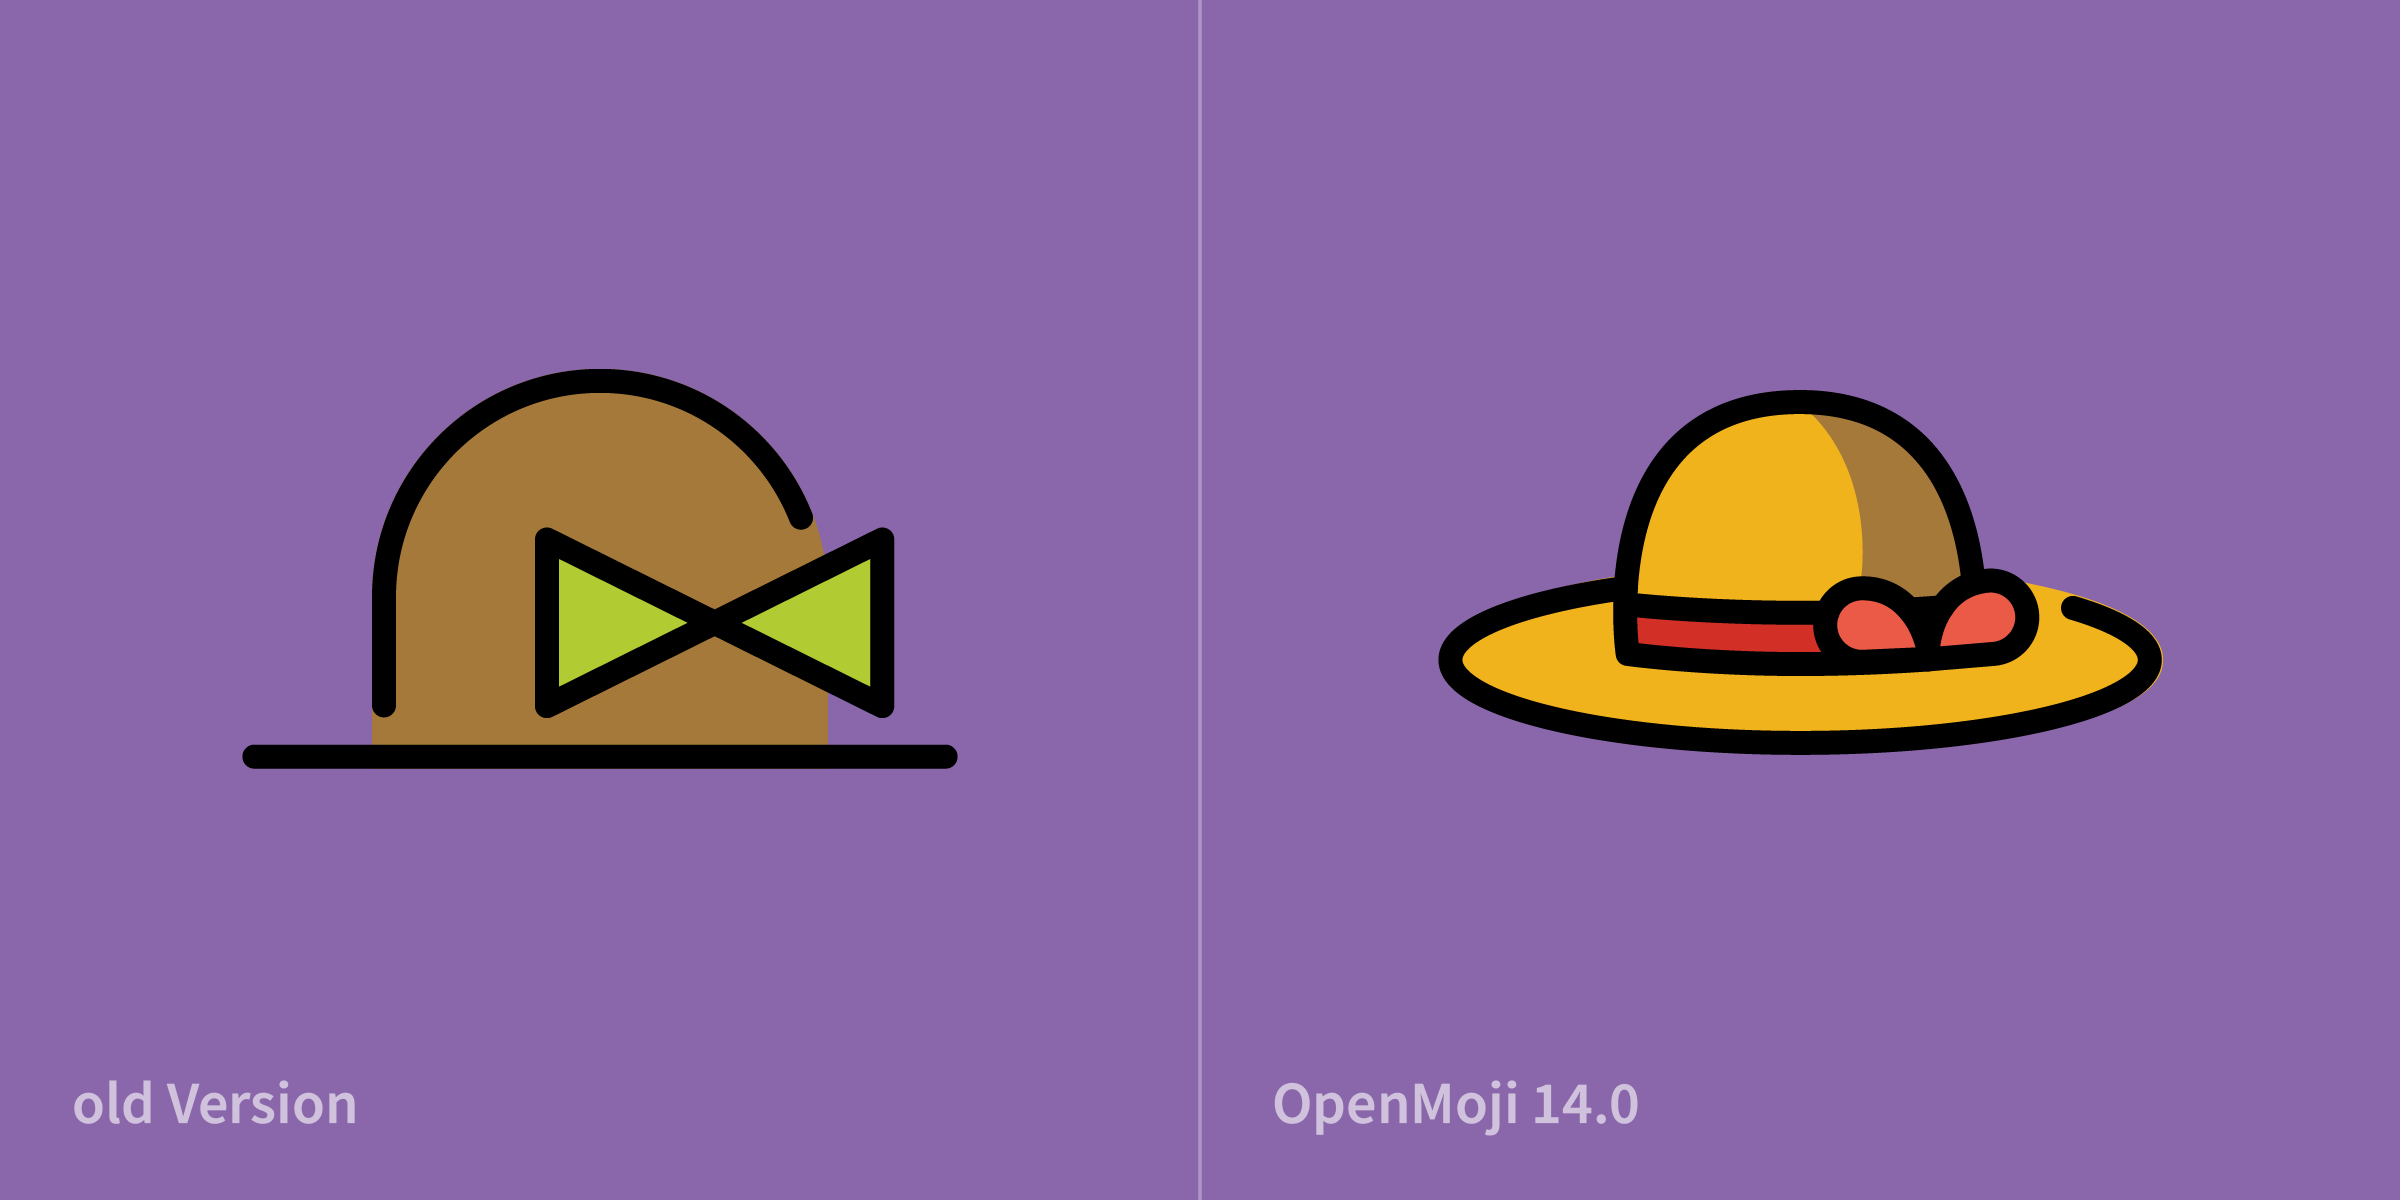 🗿 Moai on OpenMoji 14.0